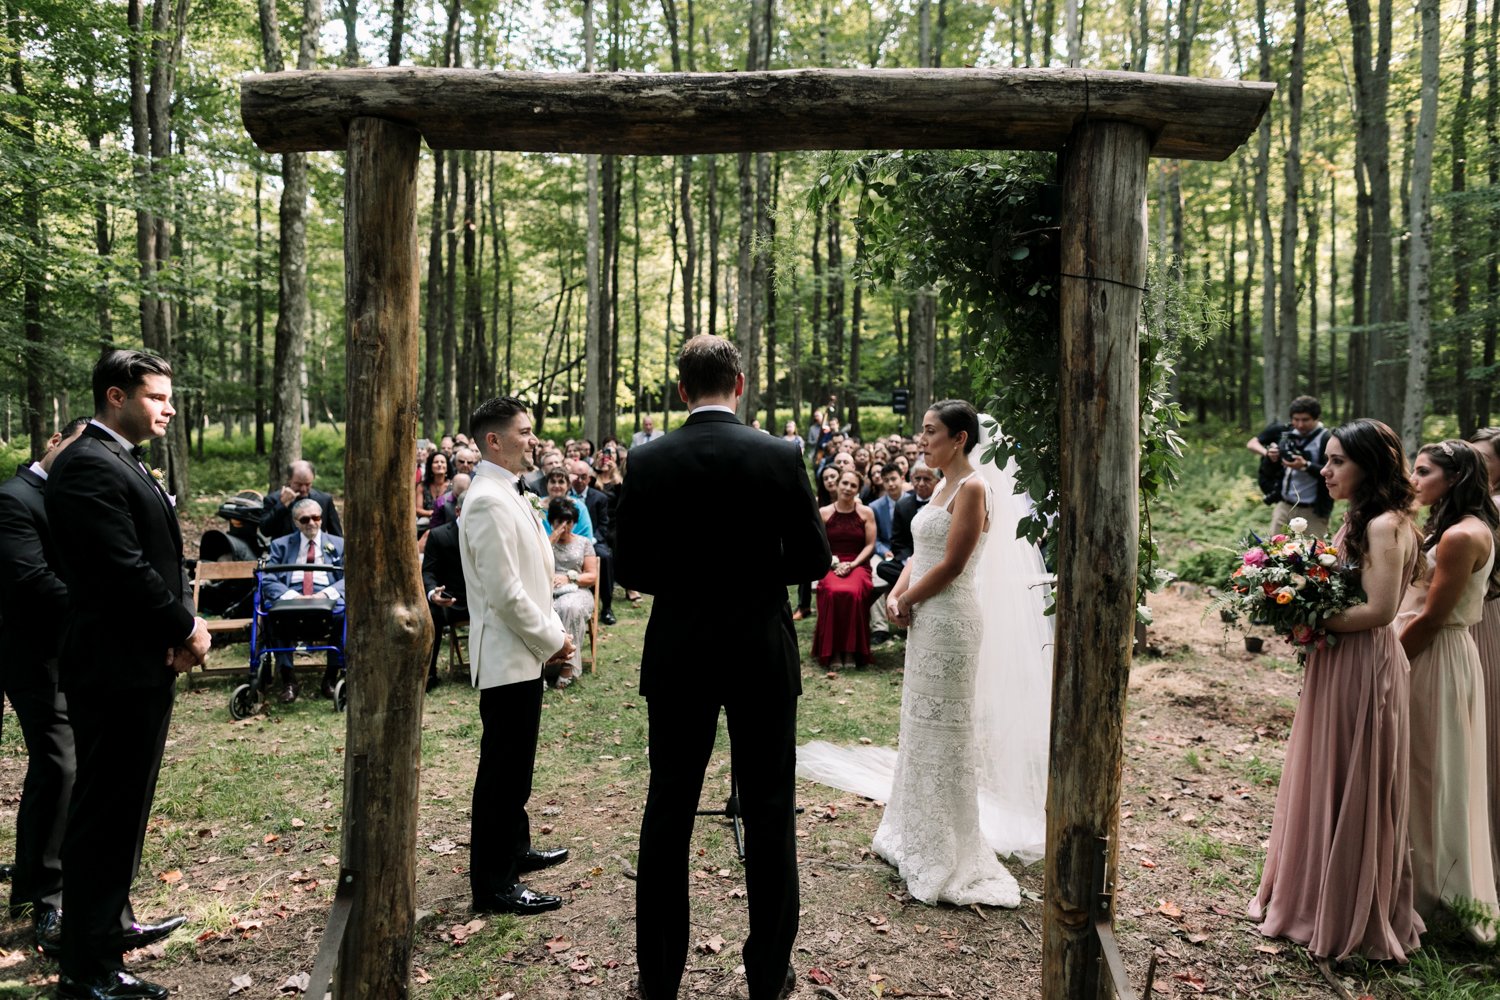 Handsome-Hollow-Catskills-wedding-photographer-62.jpg